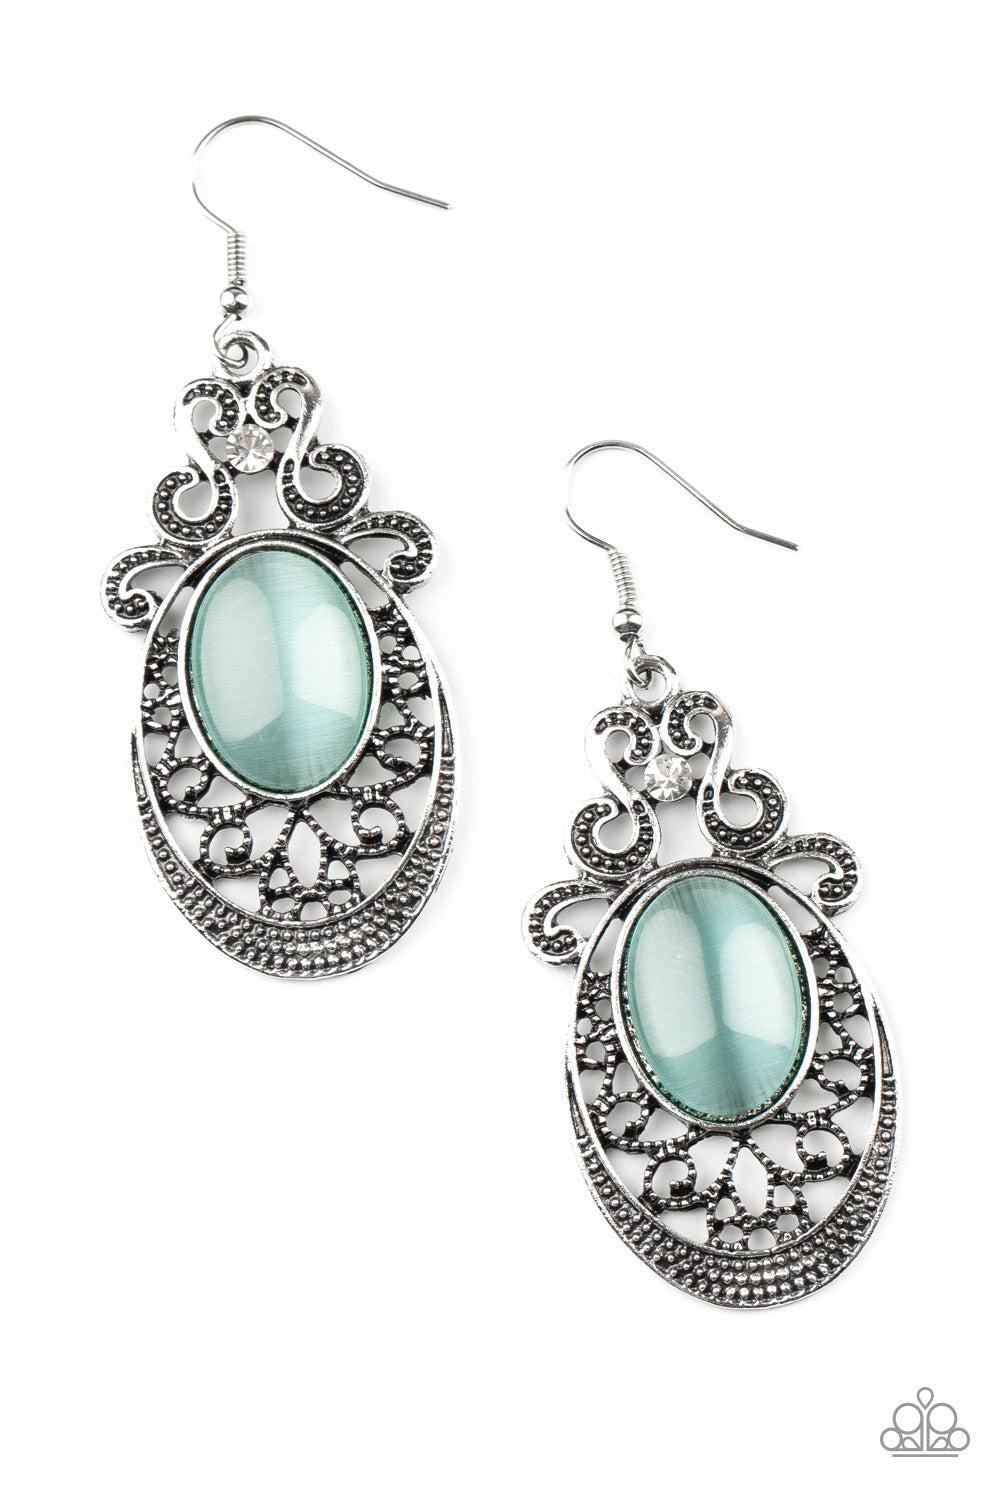 Garden Gondola Ride Blue Cat's Eye Stone Earrings - Paparazzi Accessories- lightbox - CarasShop.com - $5 Jewelry by Cara Jewels